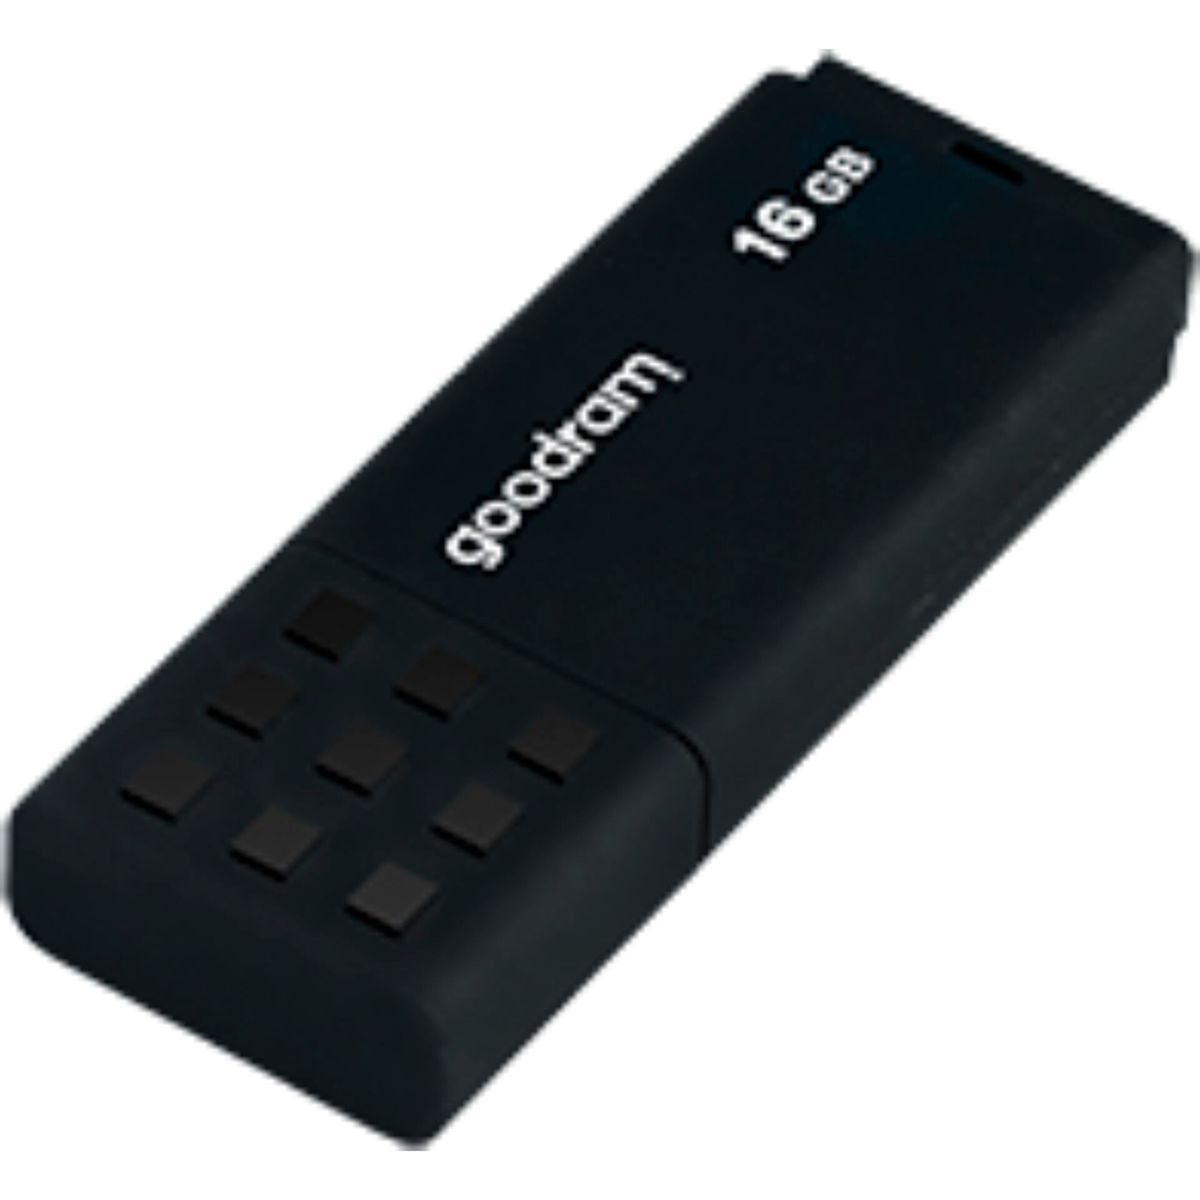 GOODRAM 3.0 UME3 16 Stick USB (schwarz, GB) 16GB Black USB